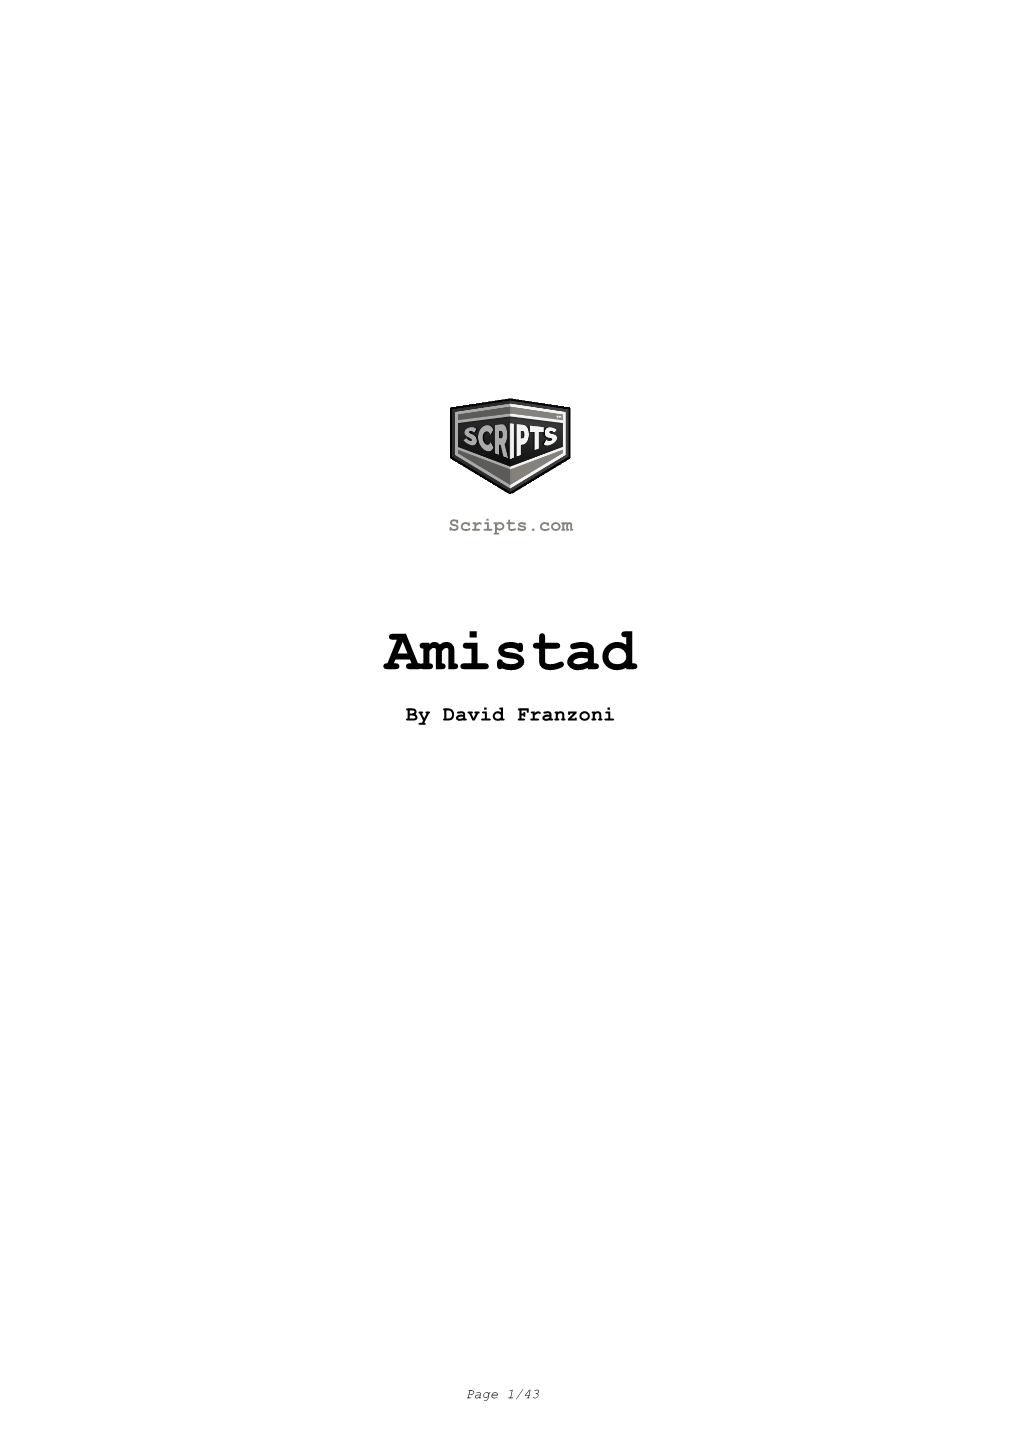 Amistad Movie Script in PDF Format